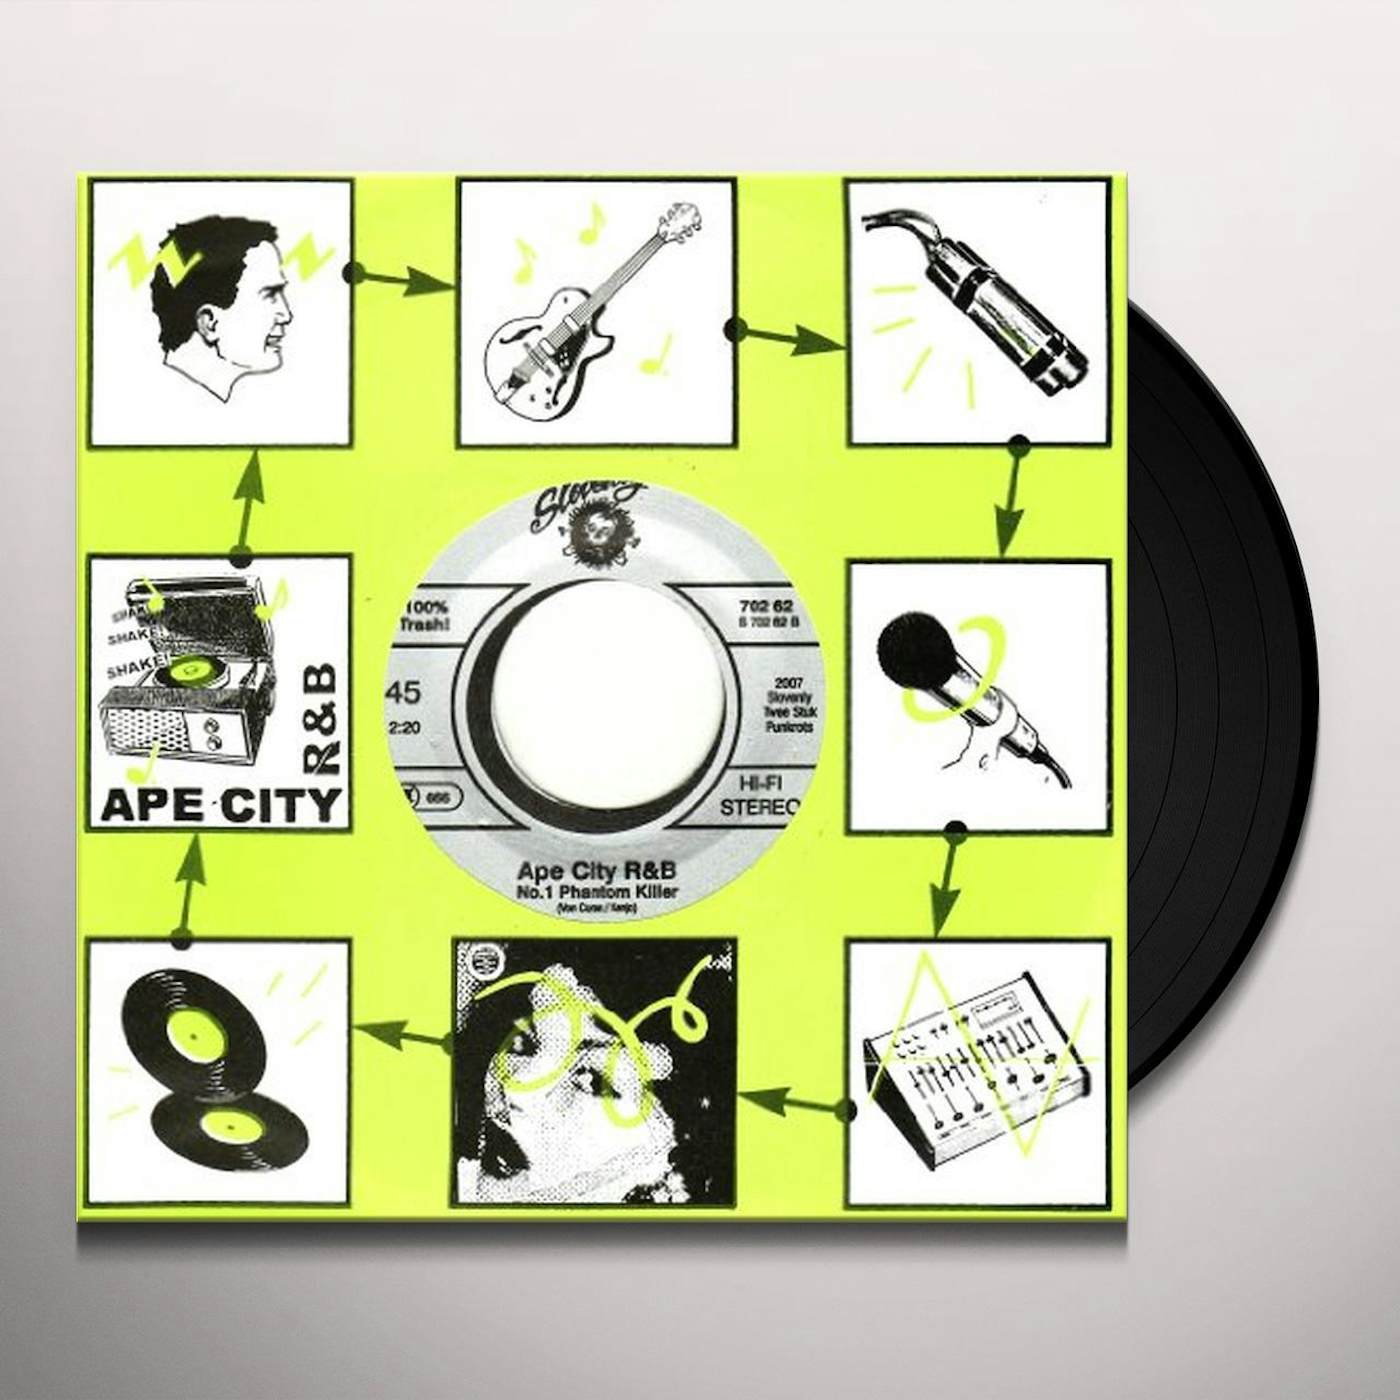 Ape City R&B DYN-O-MITE / 1 PHANTOM KILLER Vinyl Record